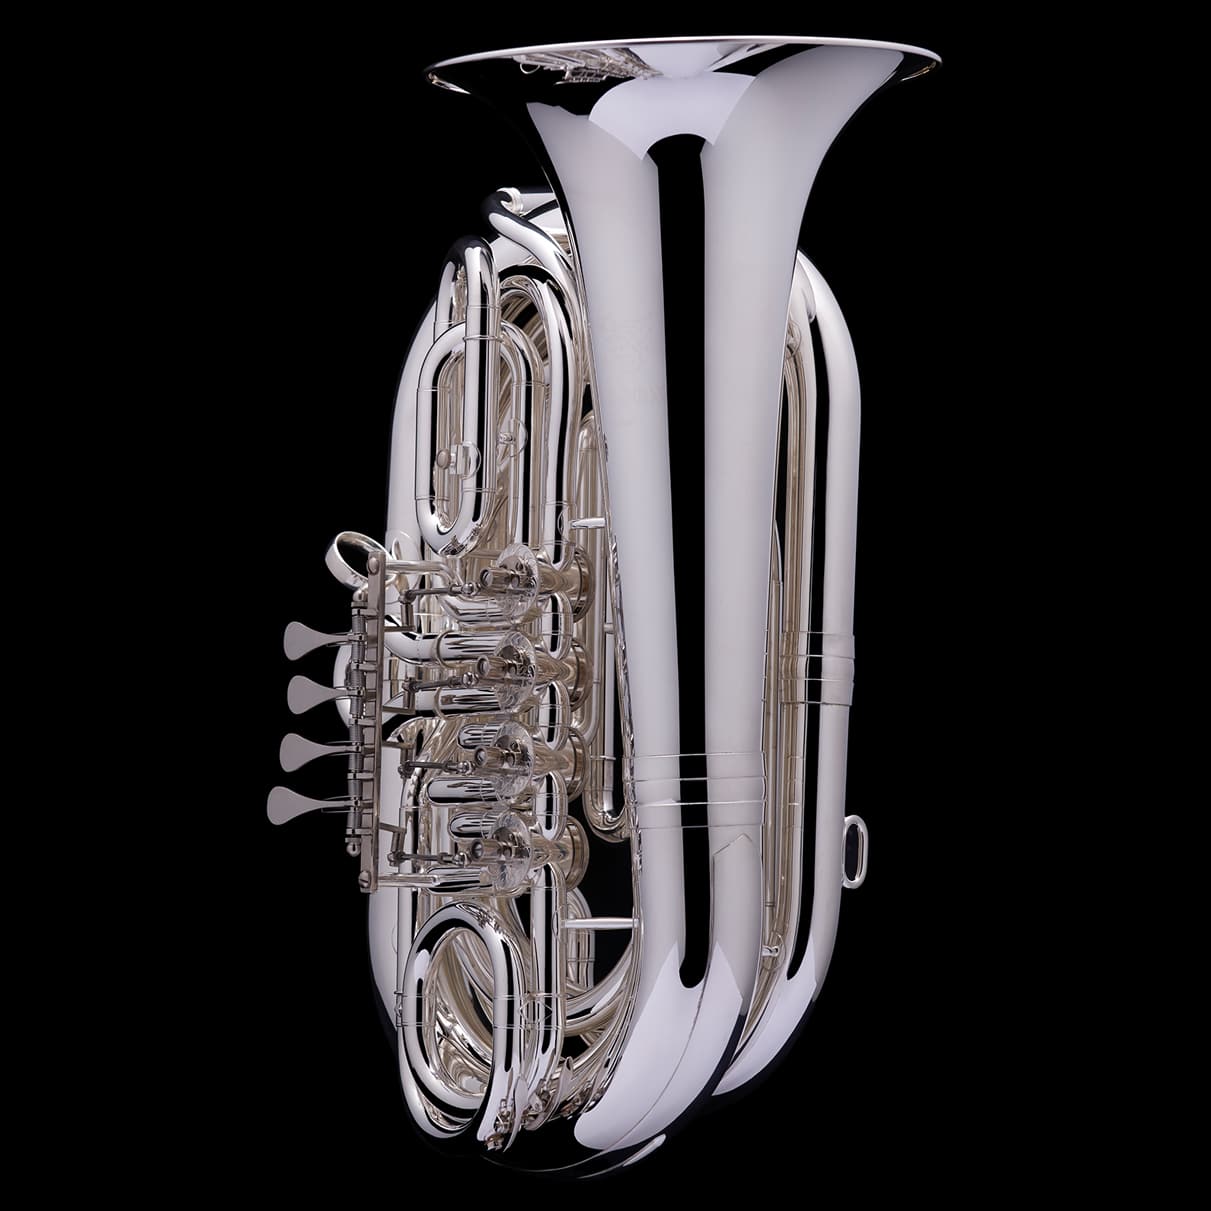 BBb Travel Tuba (tornister tuba) ‘Mighty Midget’ – TB160